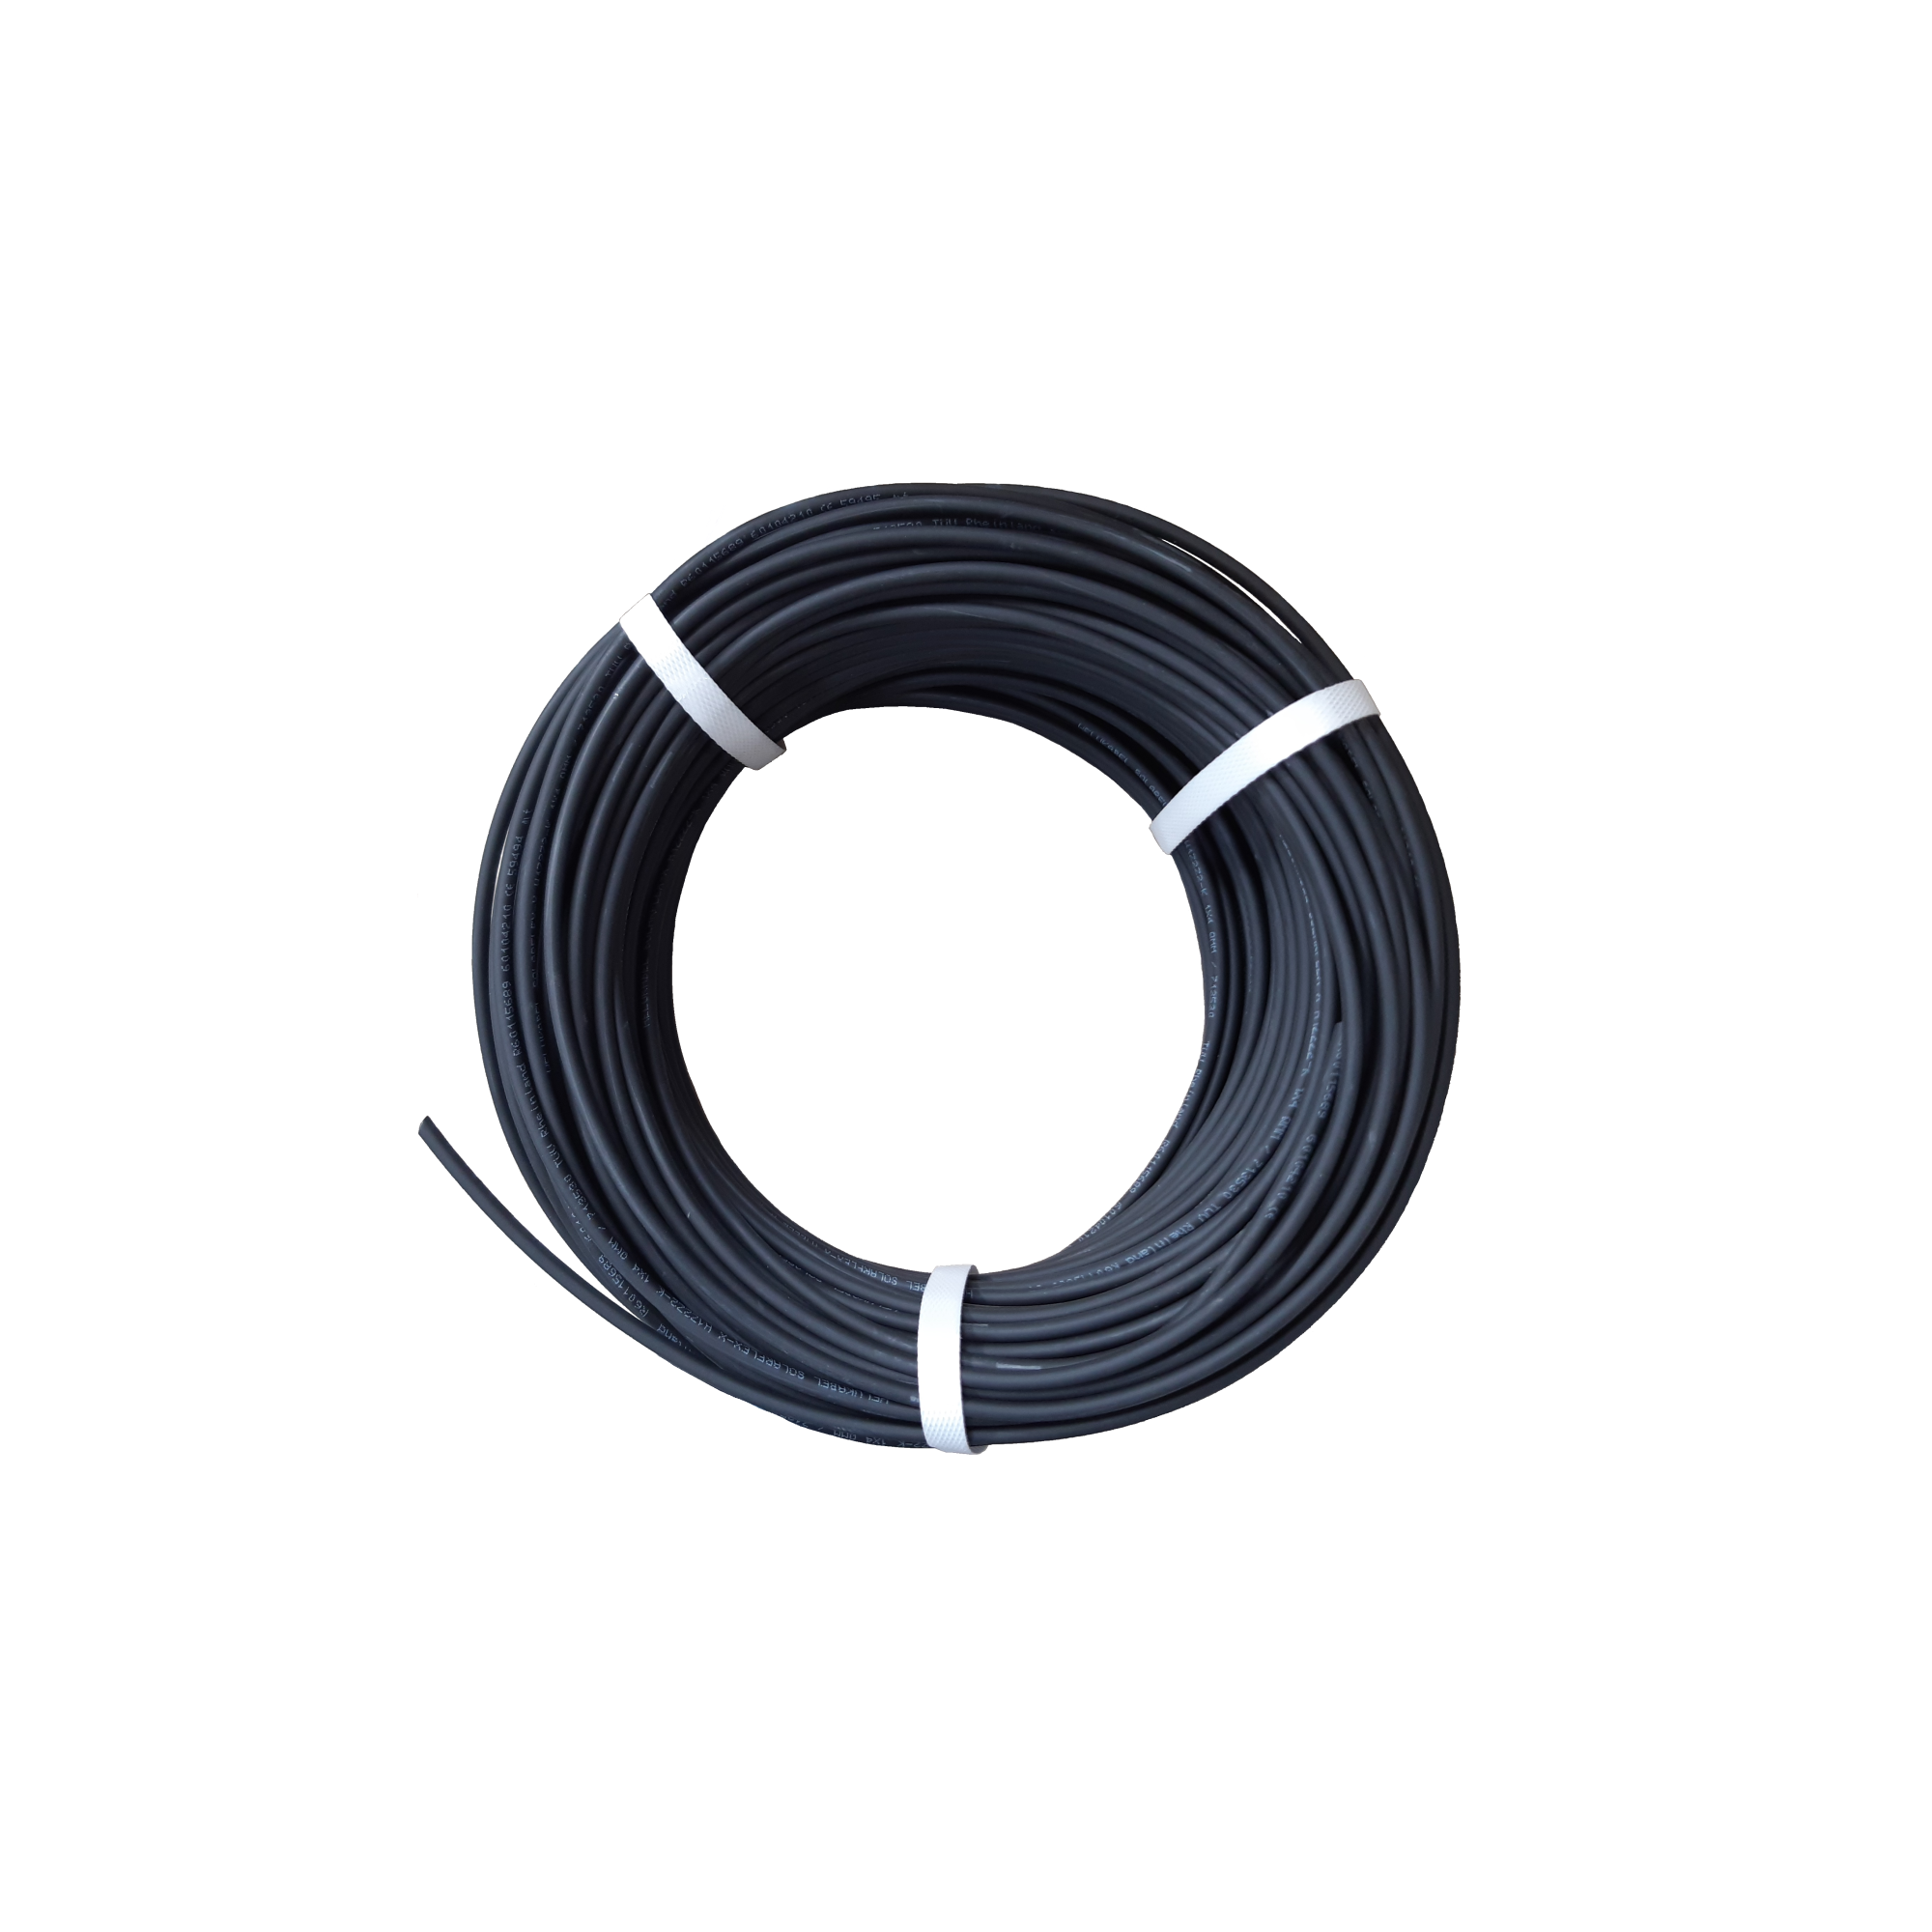 Black solar cable 6 mm2 -100 m